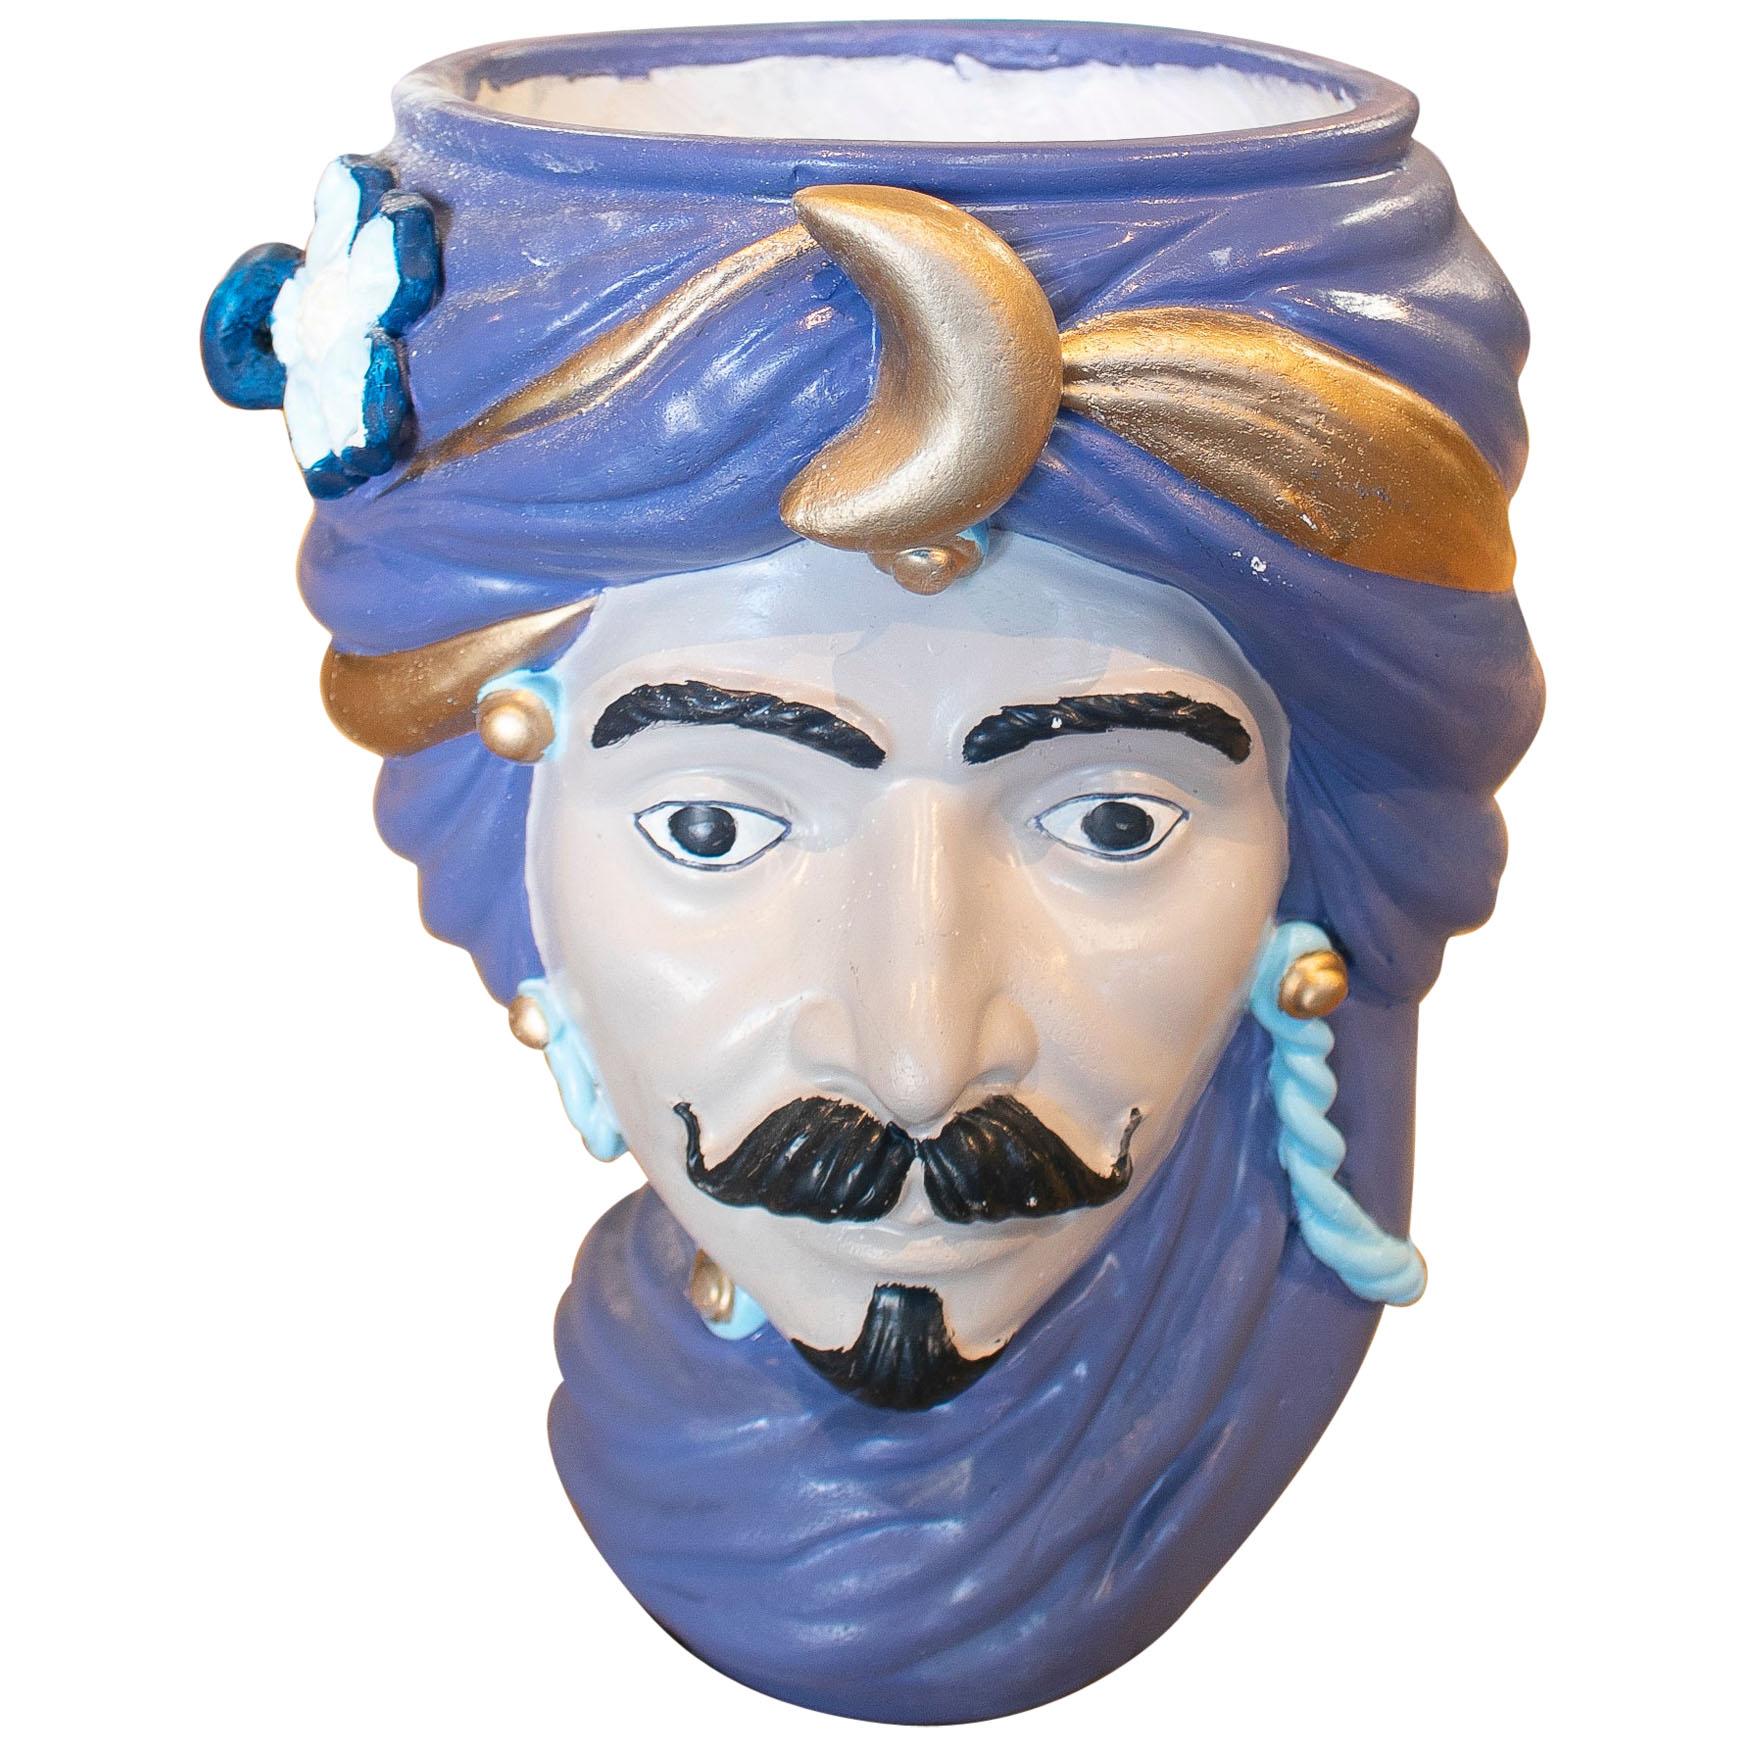 1980s Spanish Hand Painted Ceramic Vase Representing an Arab Figure